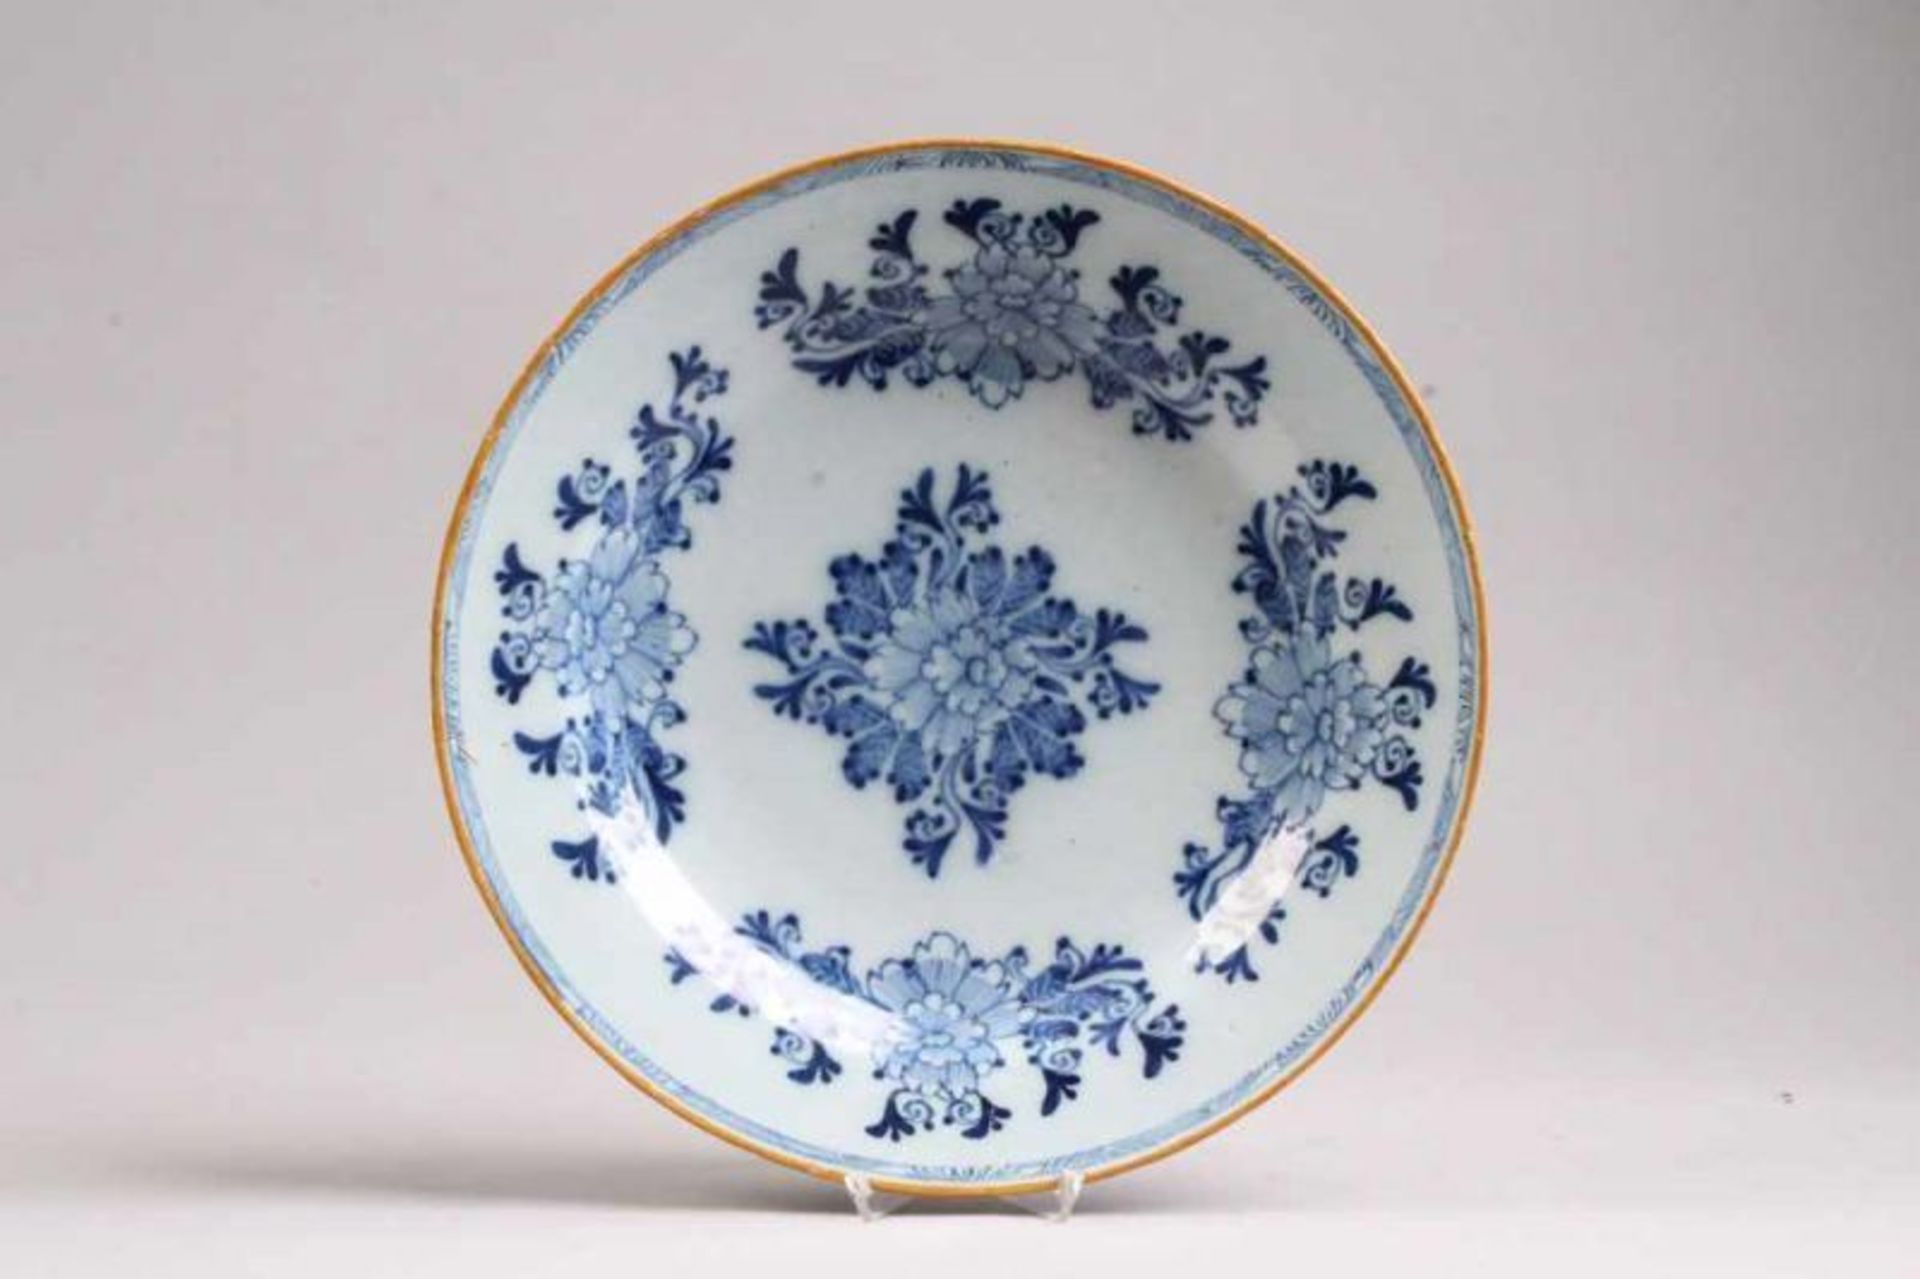 Platte.Delft, 2. H. 18. Jh. Fayence, kleisterblaue Glasur, florale Blaumalerei. Am Boden sign.: "